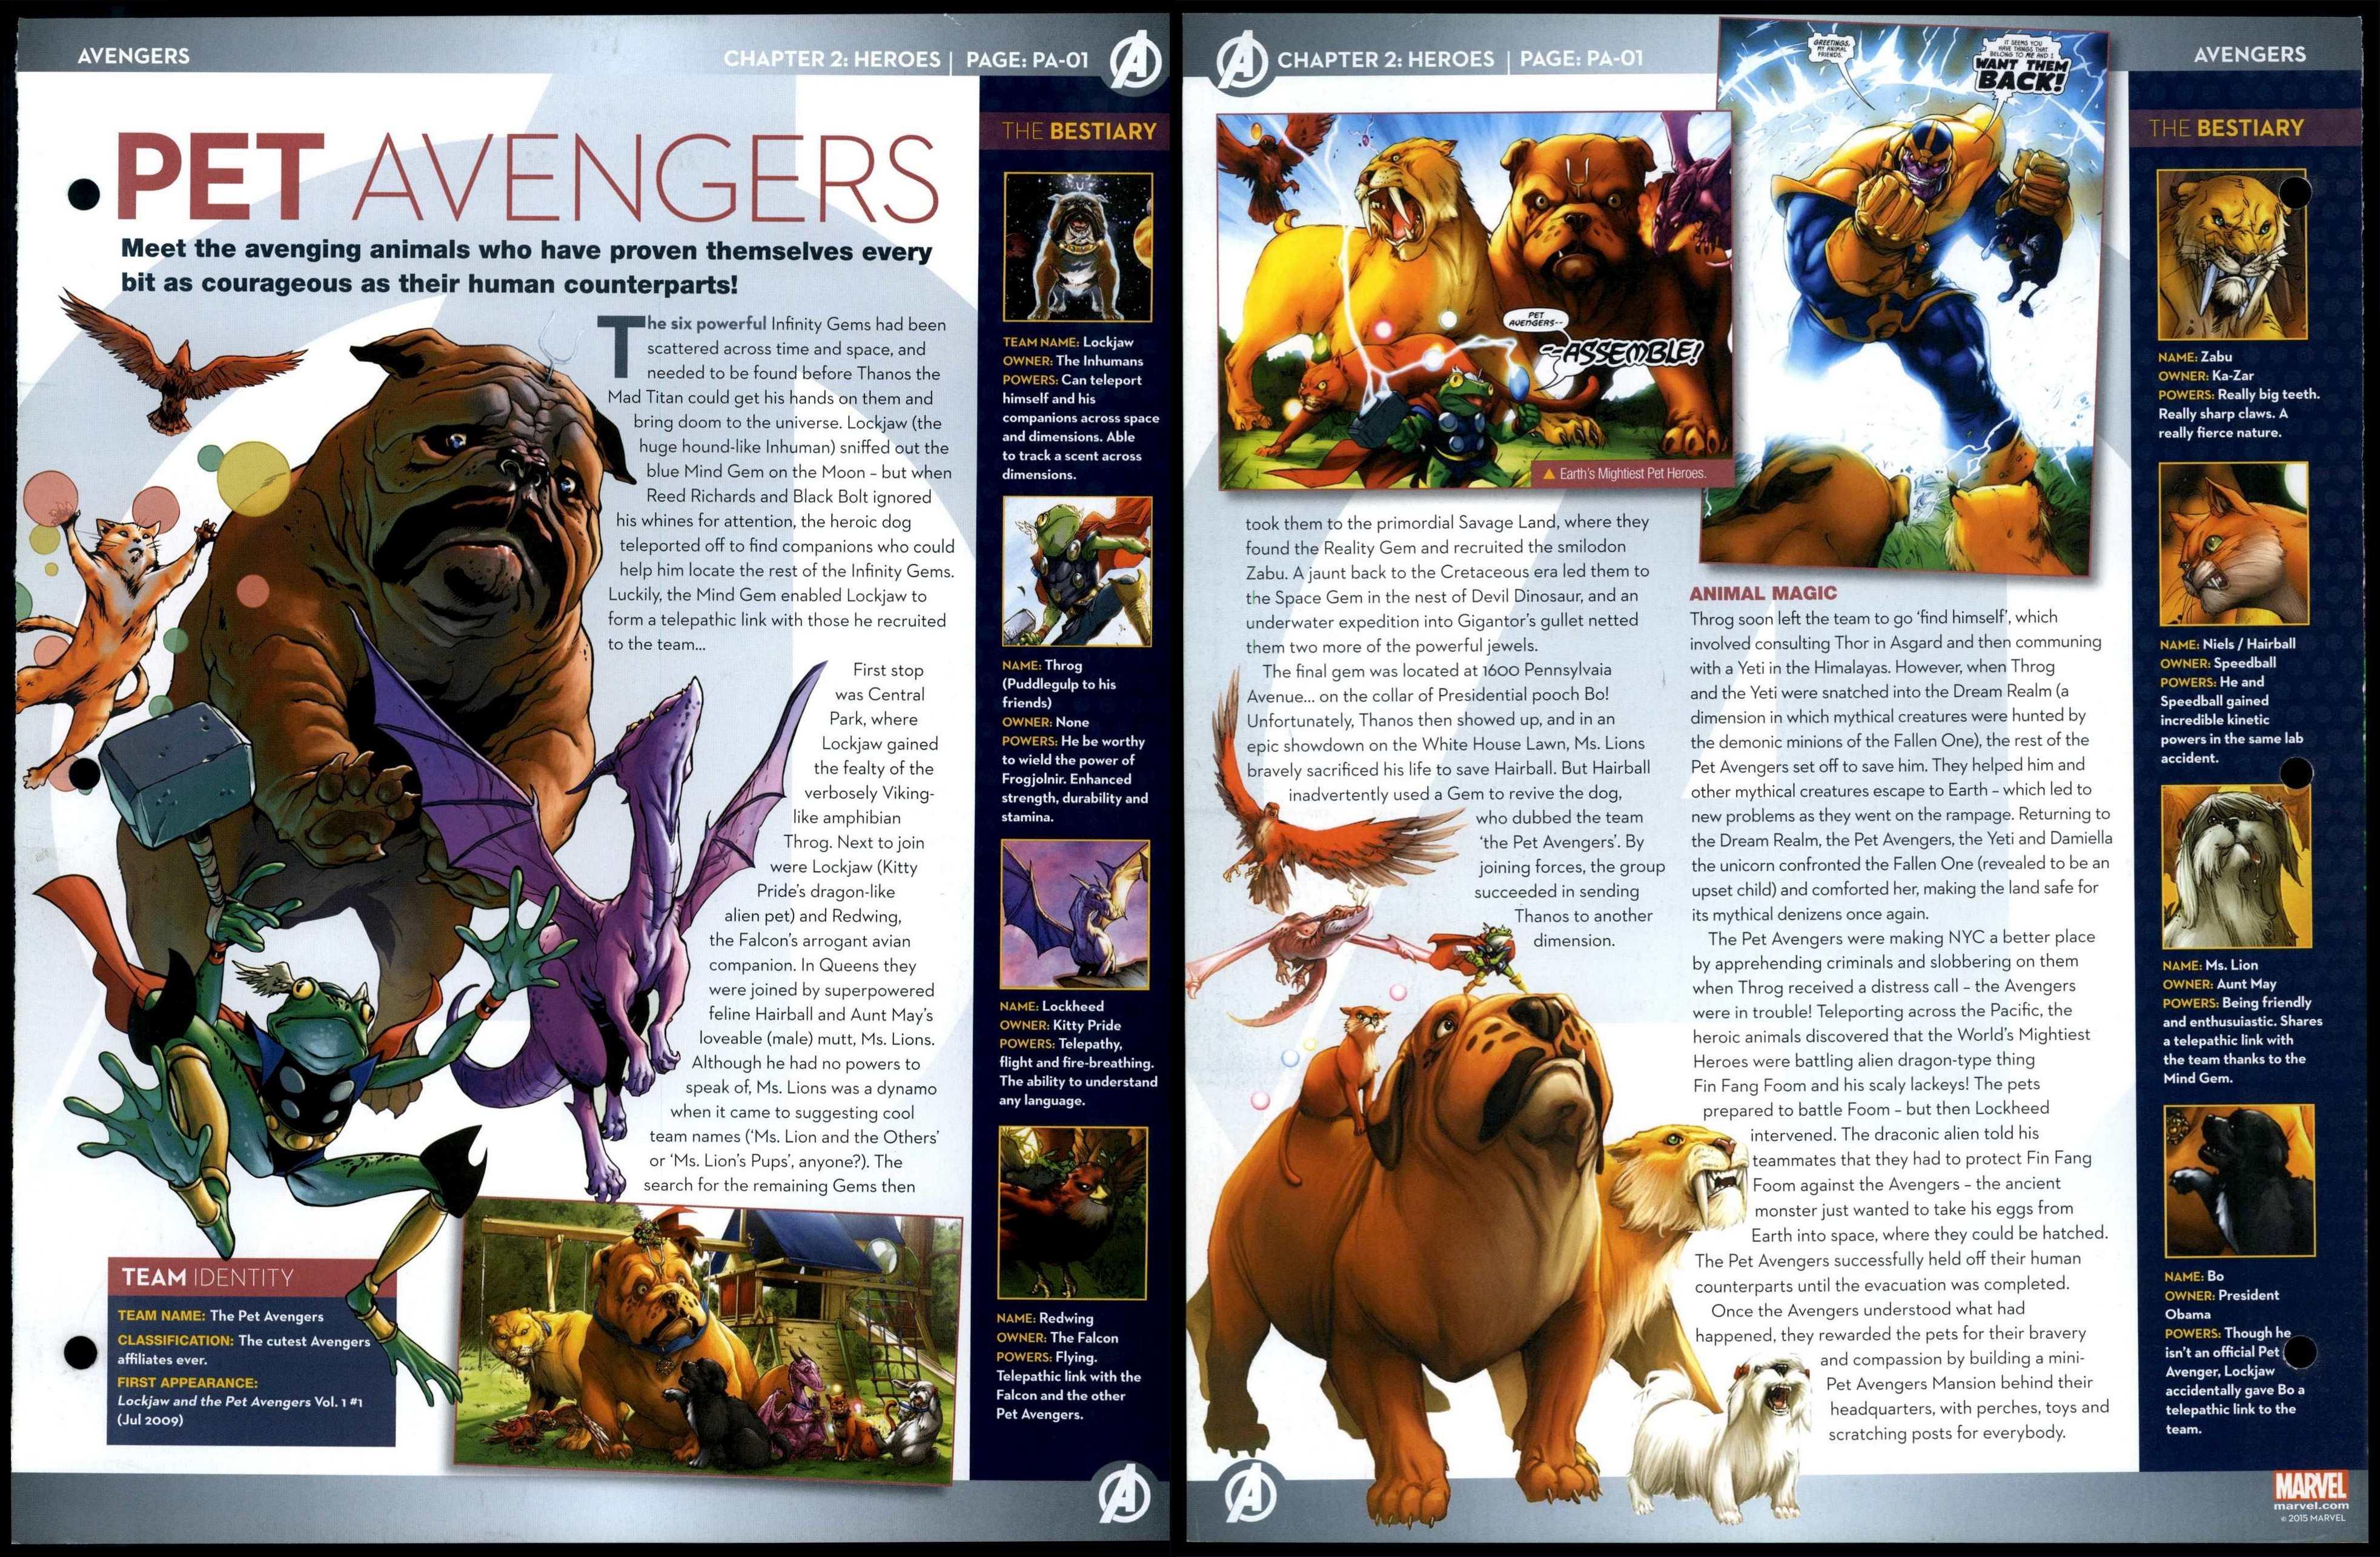 Pet Avengers #PA-01 Heroes - Avengers Marvel Fact File Page